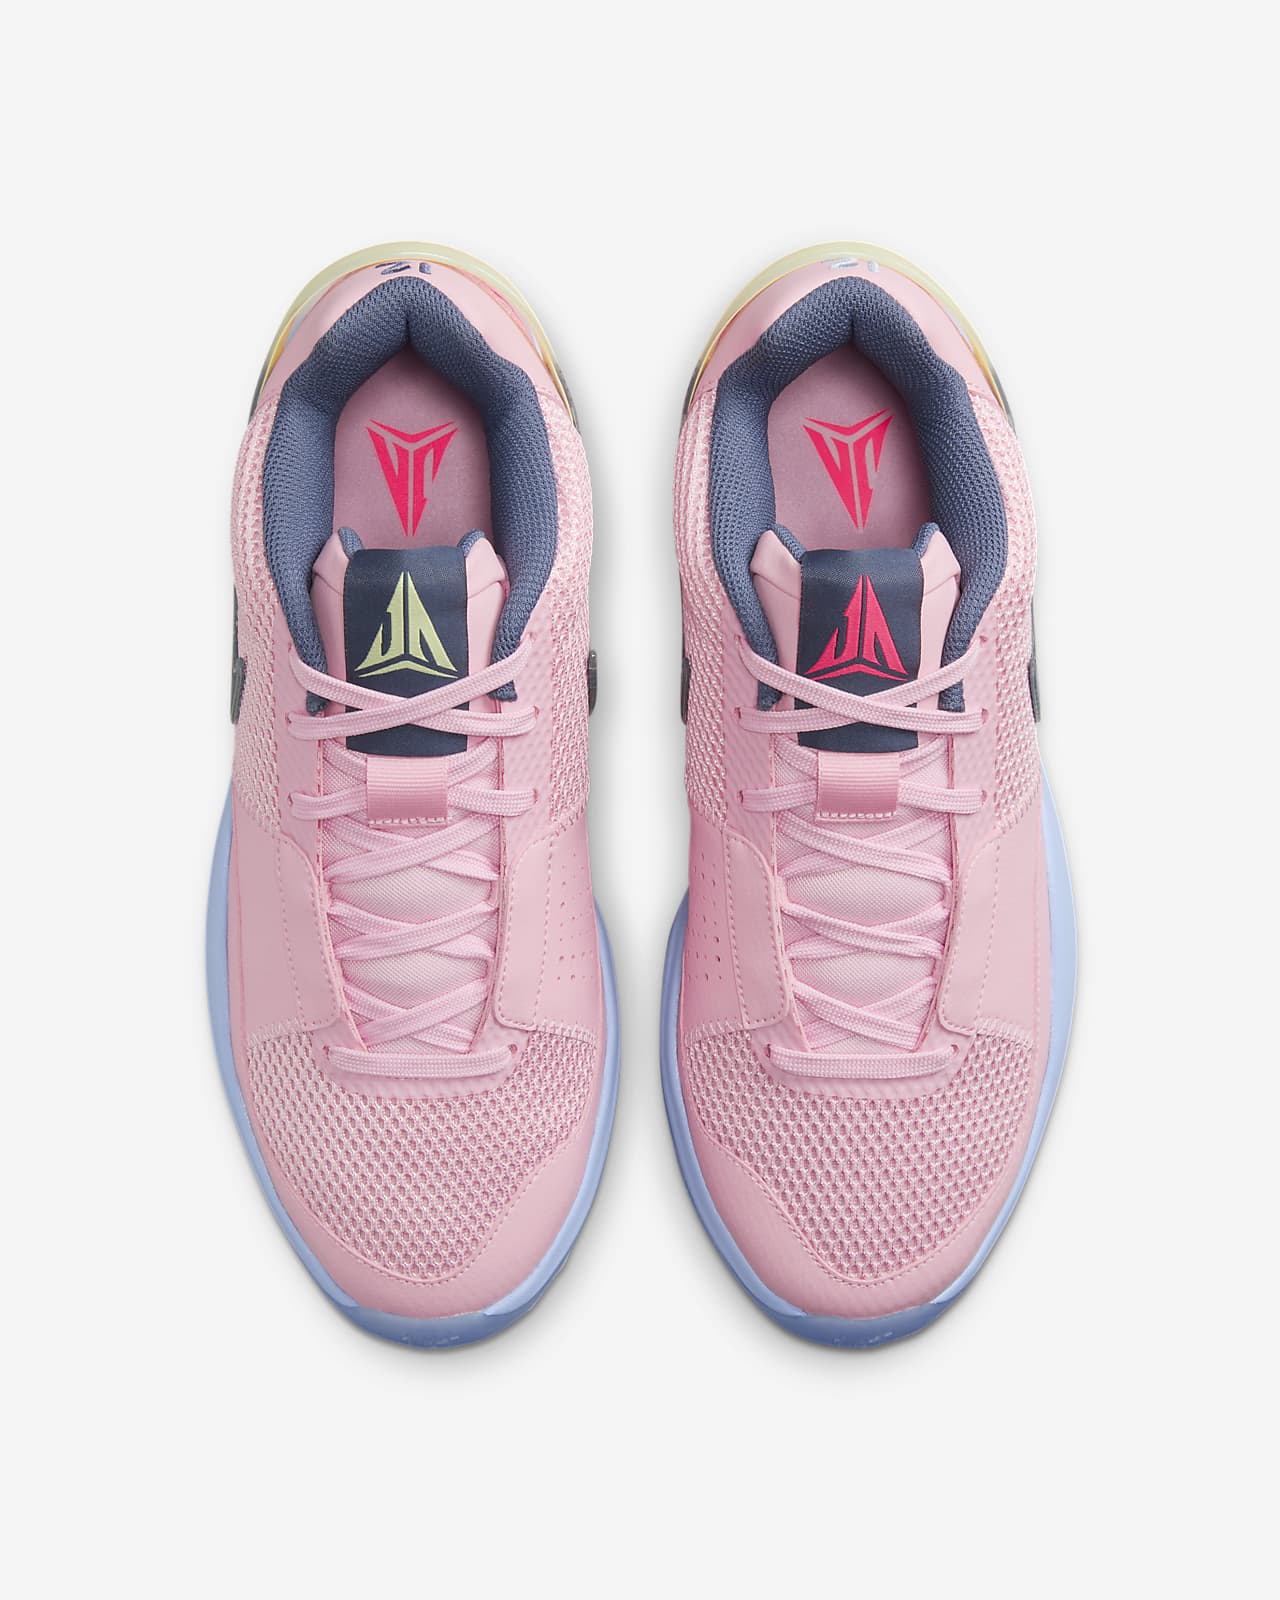 JA 1 'Wet Cement' Basketball Shoes. Nike LU